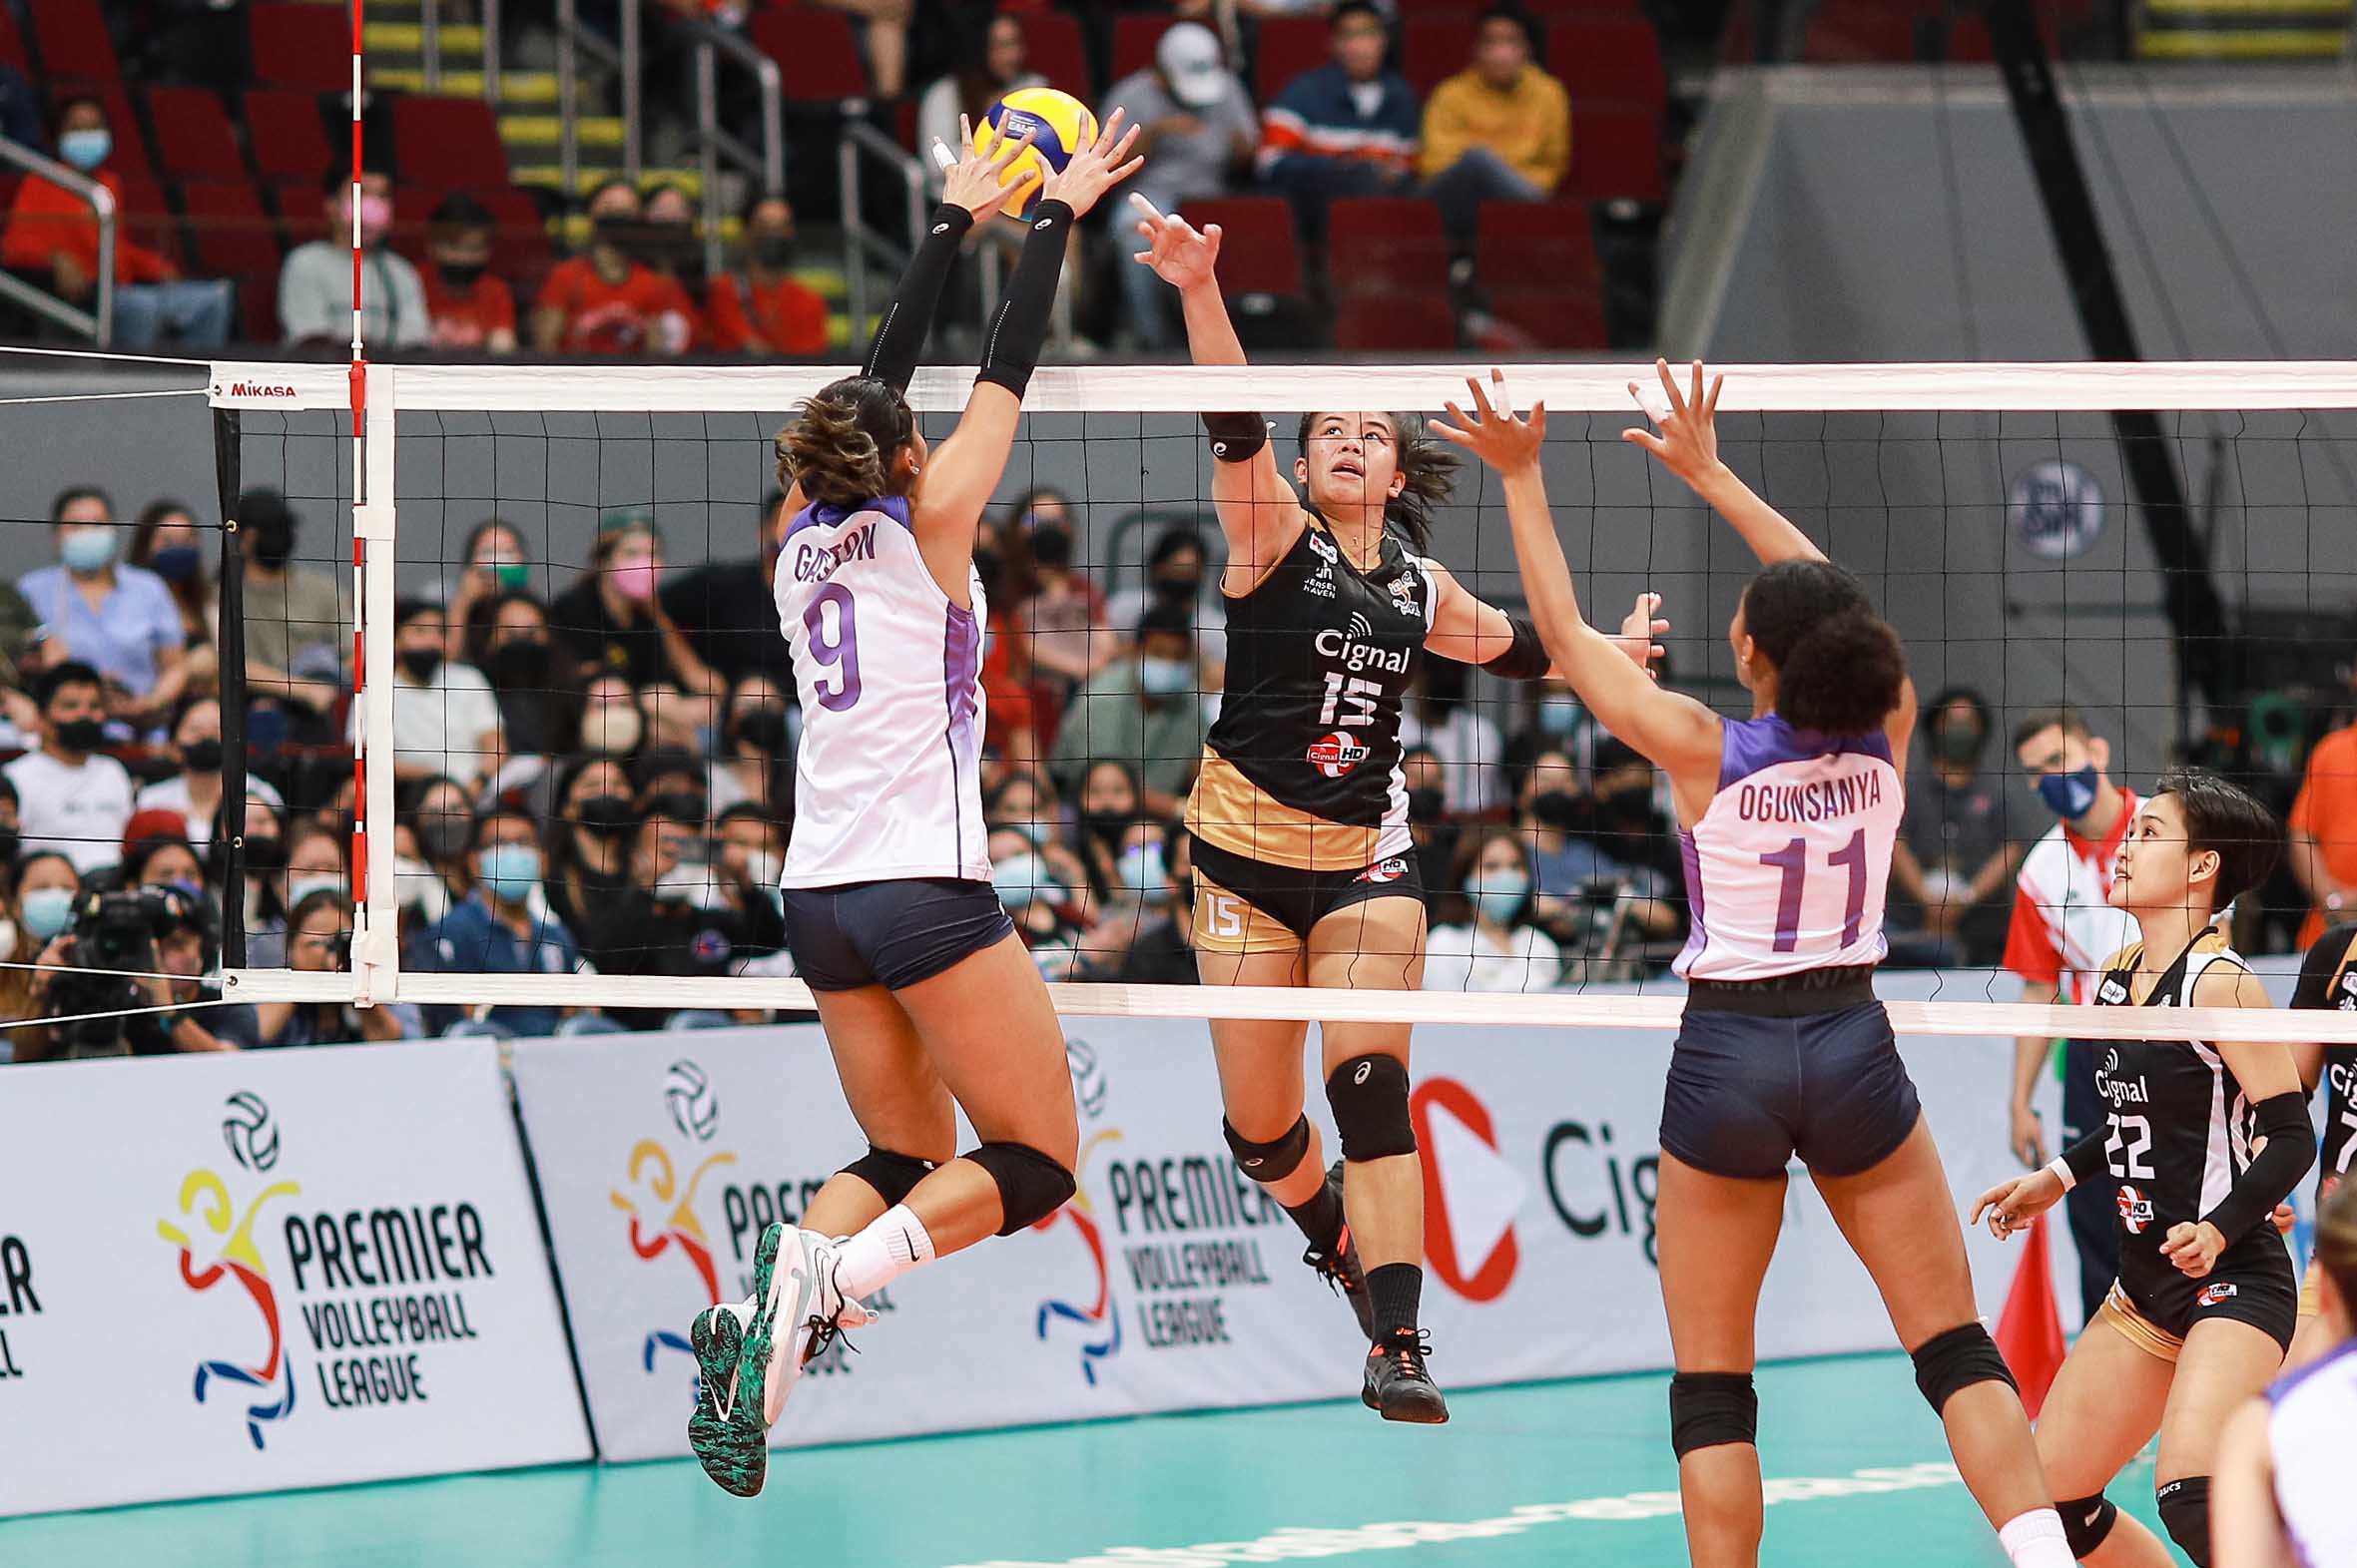 2022-PVL-Choco-vs-Cignal-battle-for-third-game-1-klarissa-abriam-3 Delos Santos lauds Daquis' fighting spirit as she plays through injury News PVL Volleyball  - philippine sports news